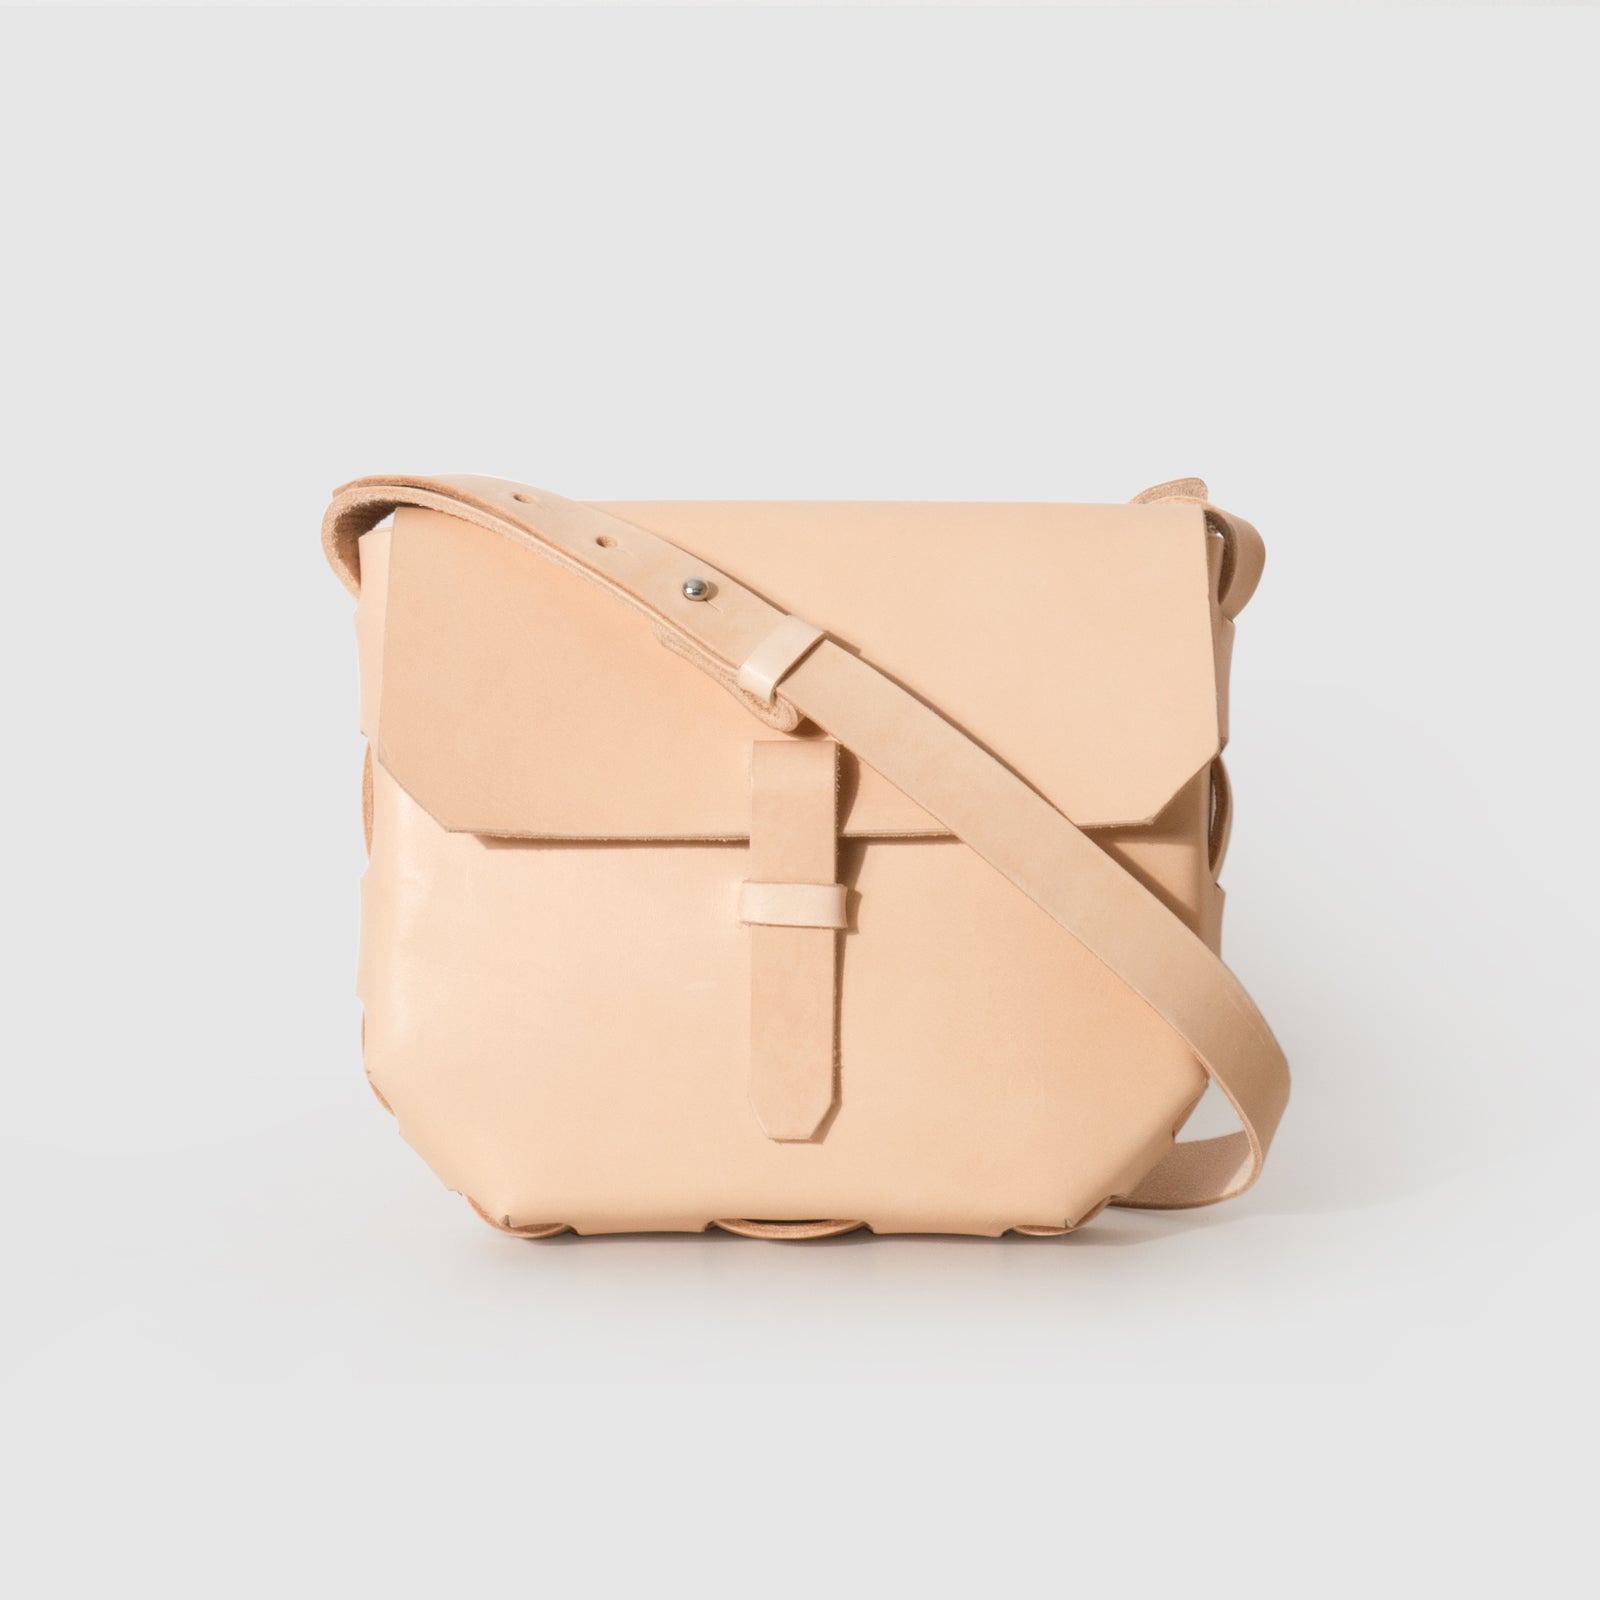 Badgley Mischka Satchel Purse Handbag Beige Tan Leather Bag EUC | eBay